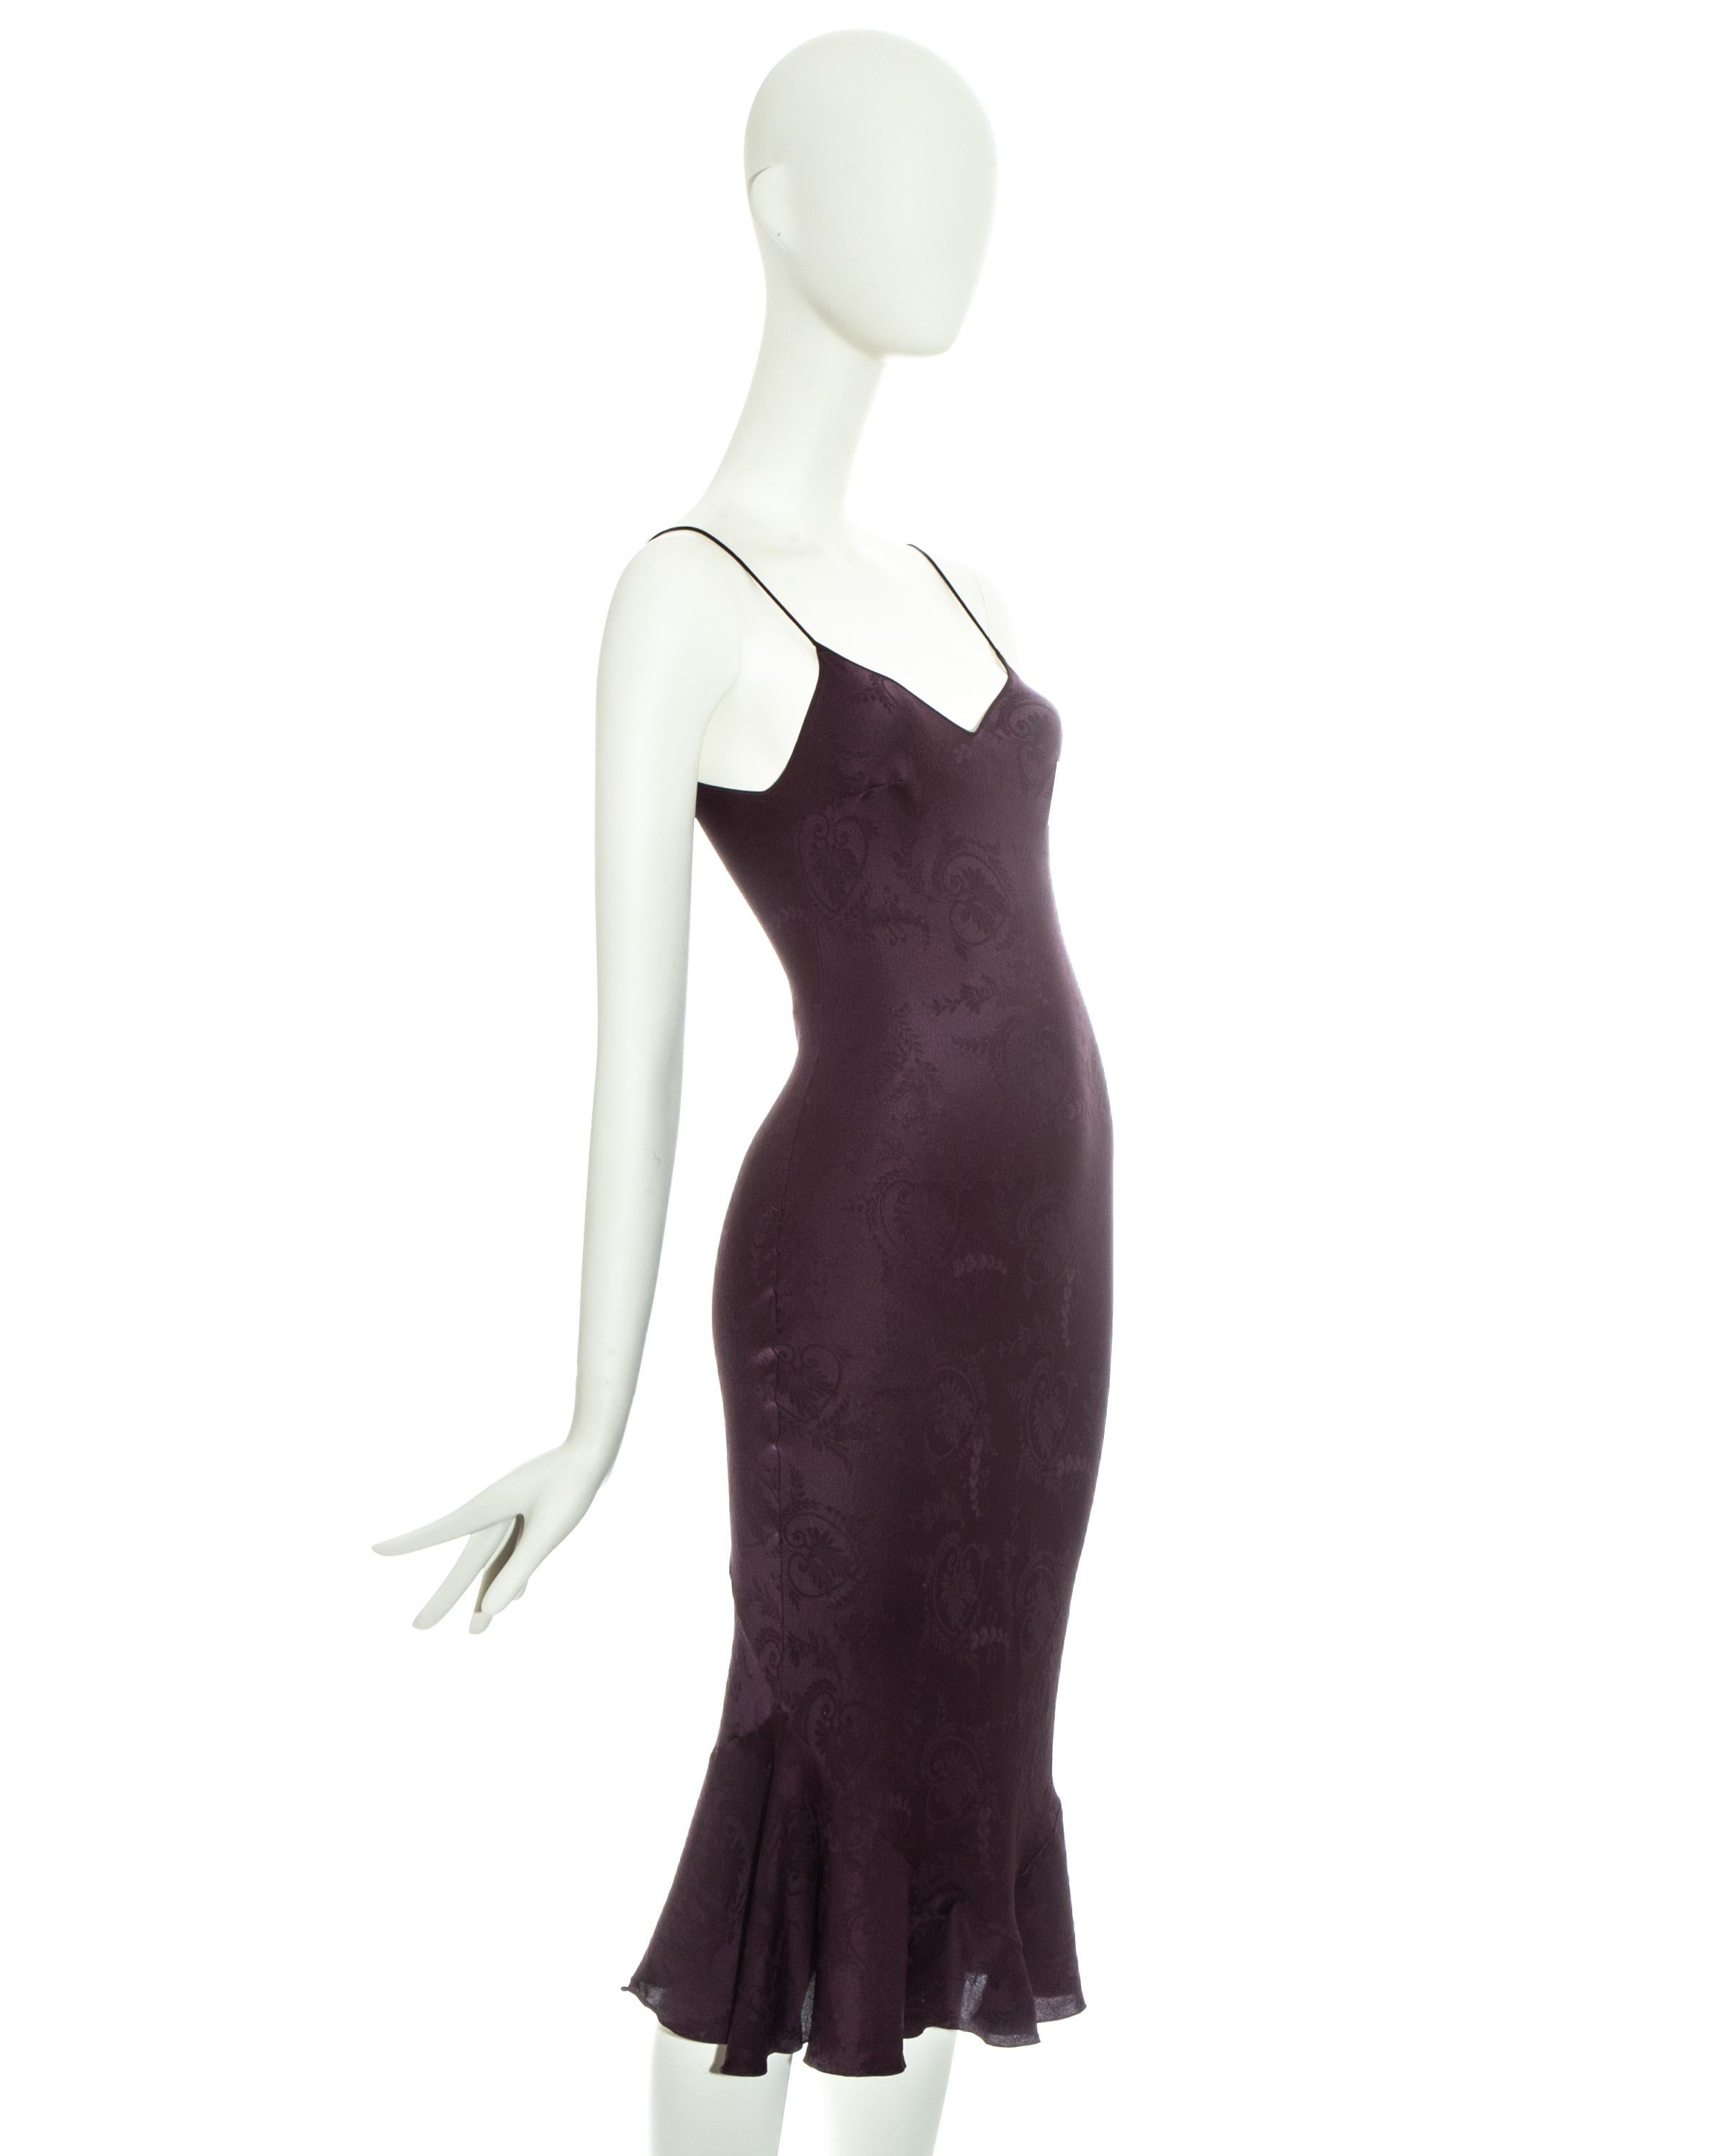 John Galliano silk brocade plum bias cut slip dress with spaghetti straps

Spring-Summer 1998